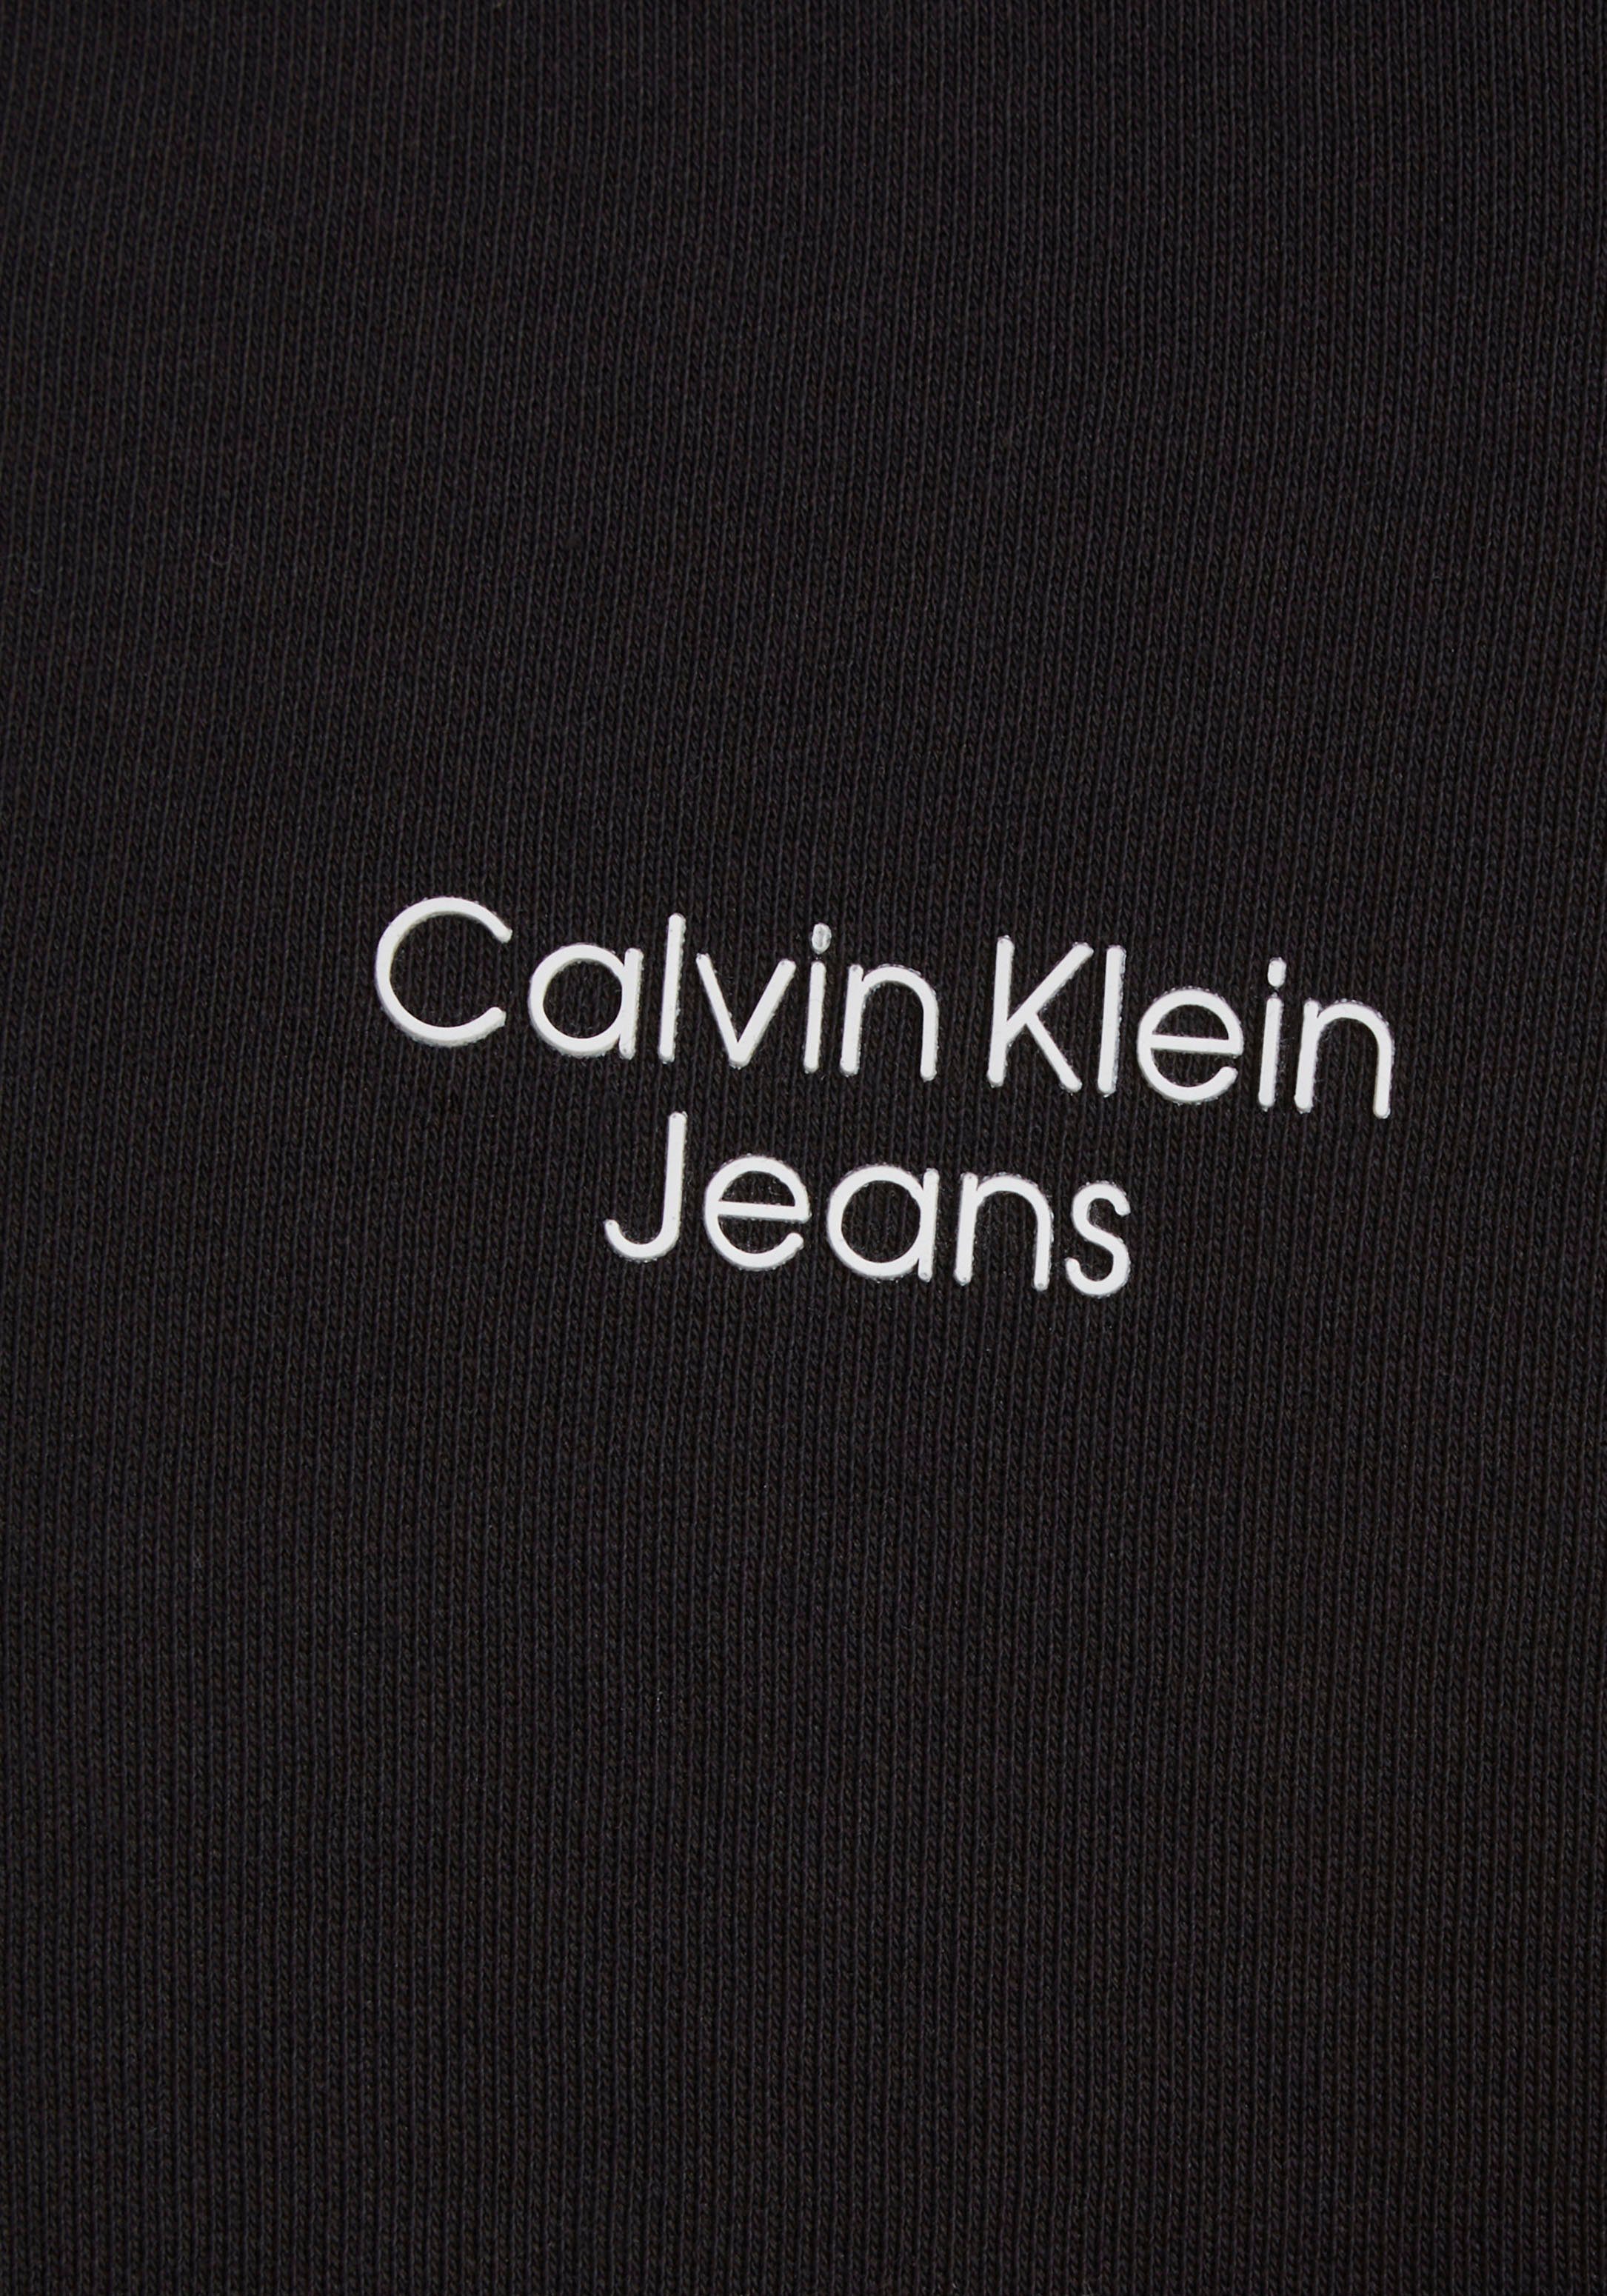 LOGO Jeans CKJ Klein SWEATSHIRT Sweatshirt Calvin STACK